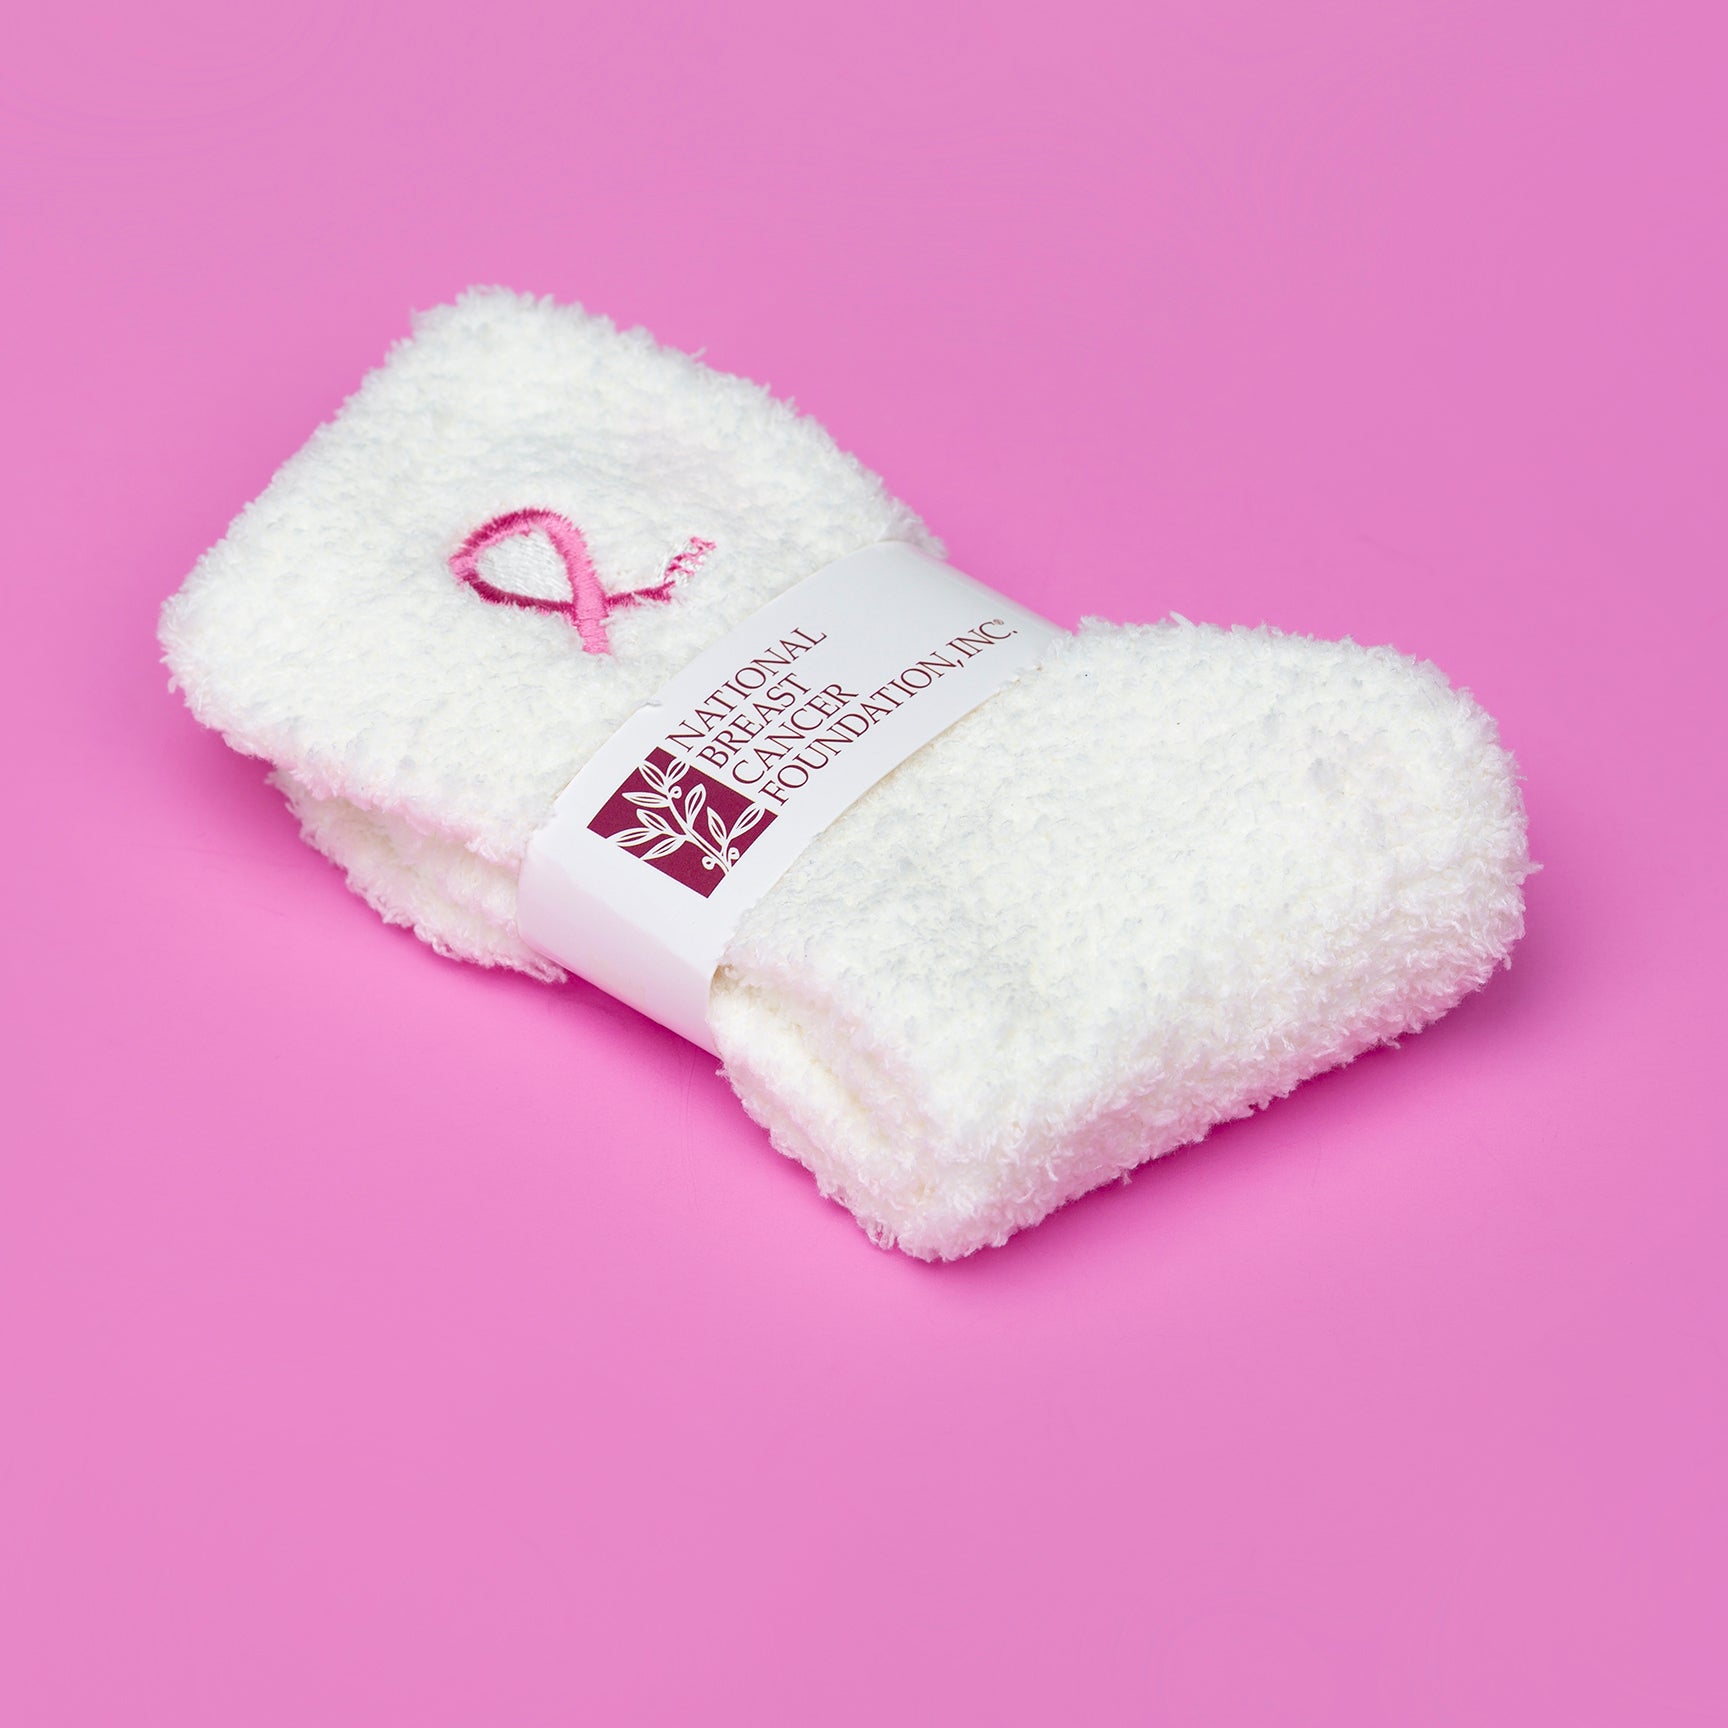 Breast Cancer Ribbon: Pink Ribbon - National Breast Cancer Foundation